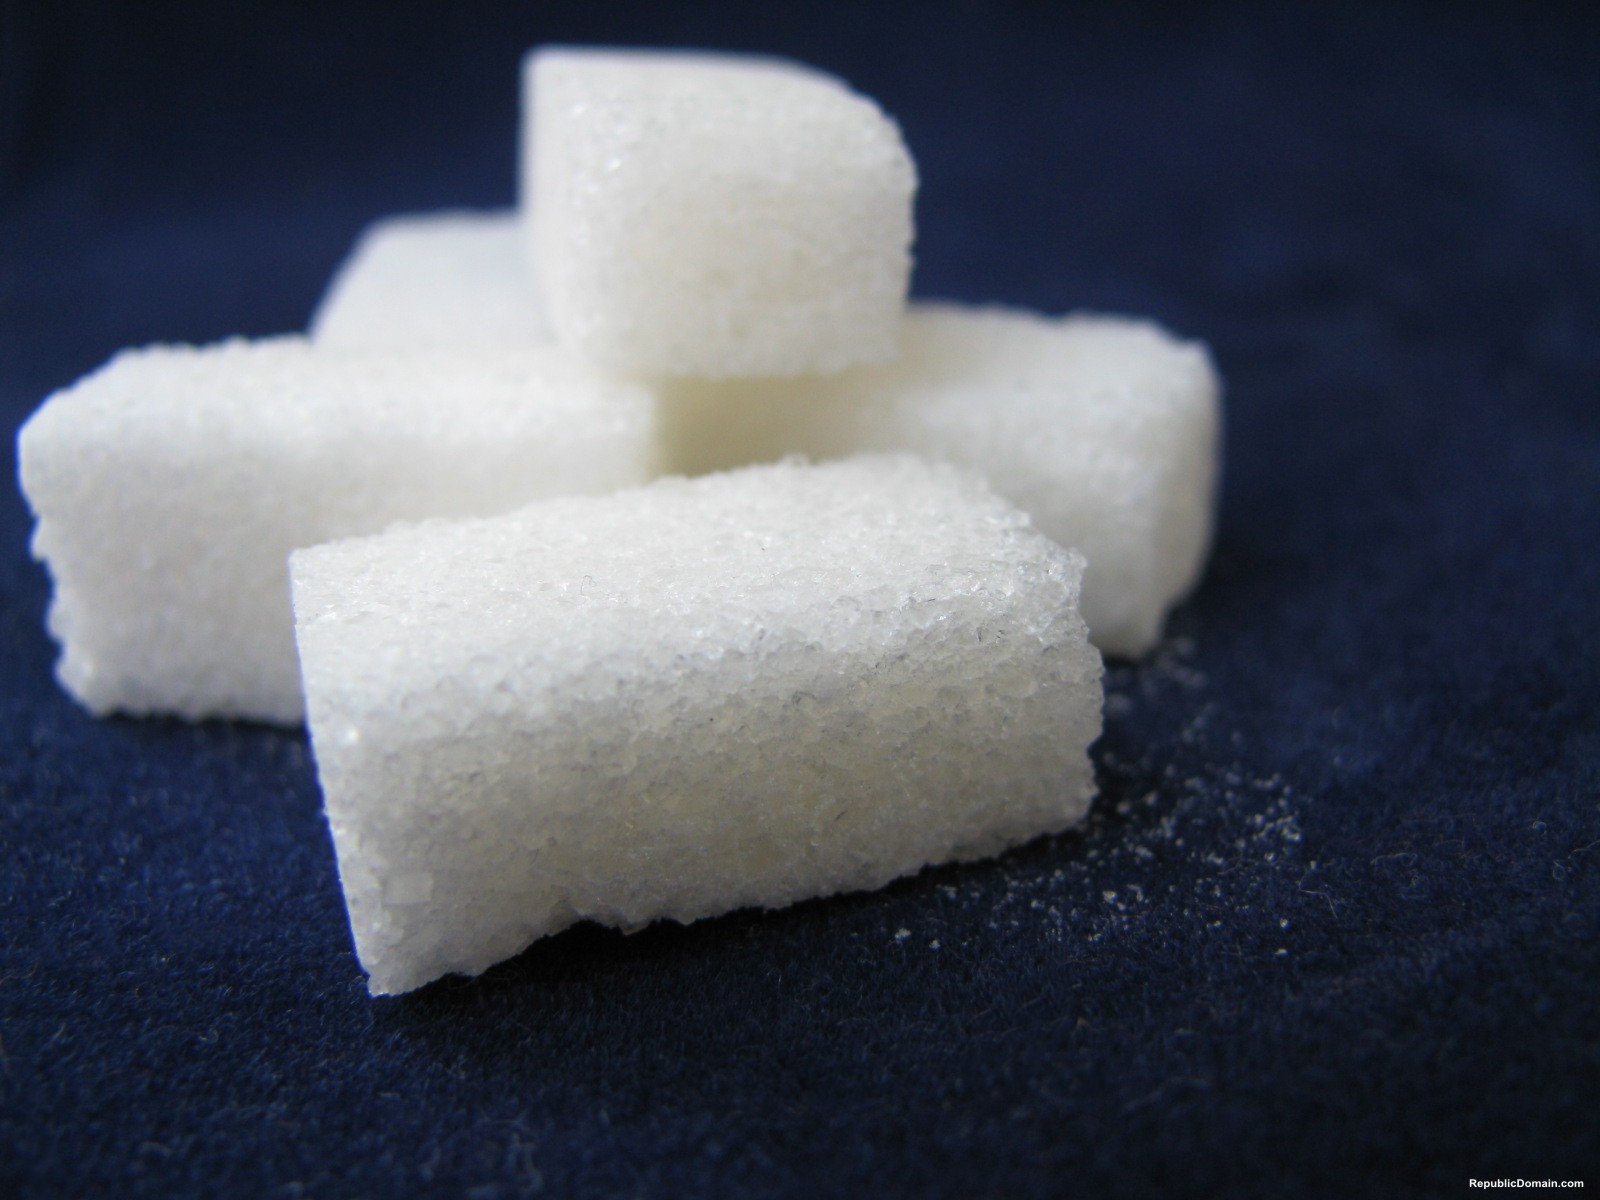 Ковид сахар. Сахар. Большой кусок сахара. Мелкокристаллический сахар. Формовой сахар.